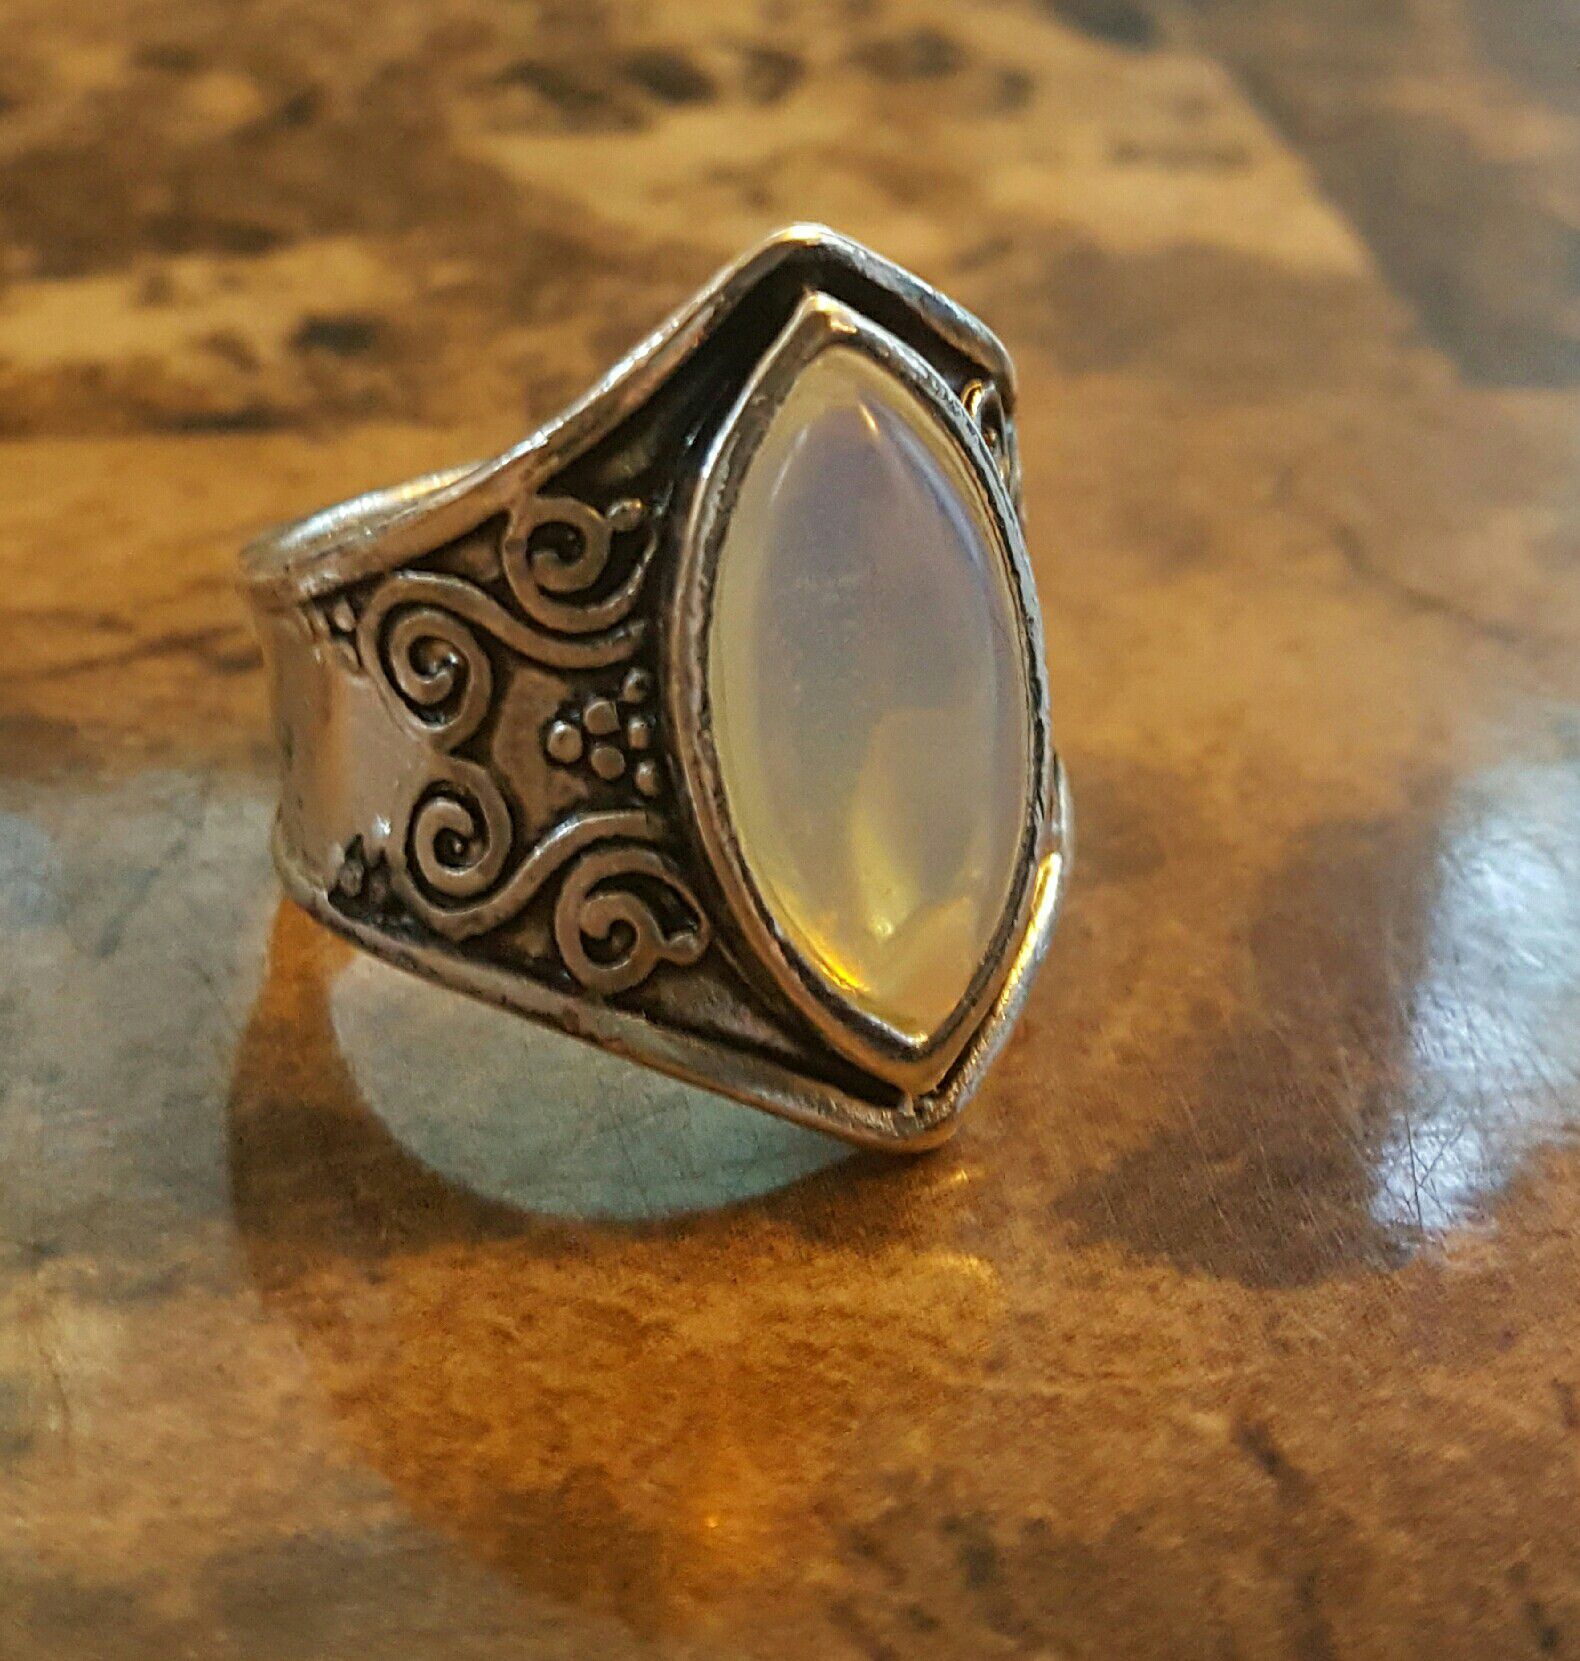 New Moonstone Ring in Tibetan Silver